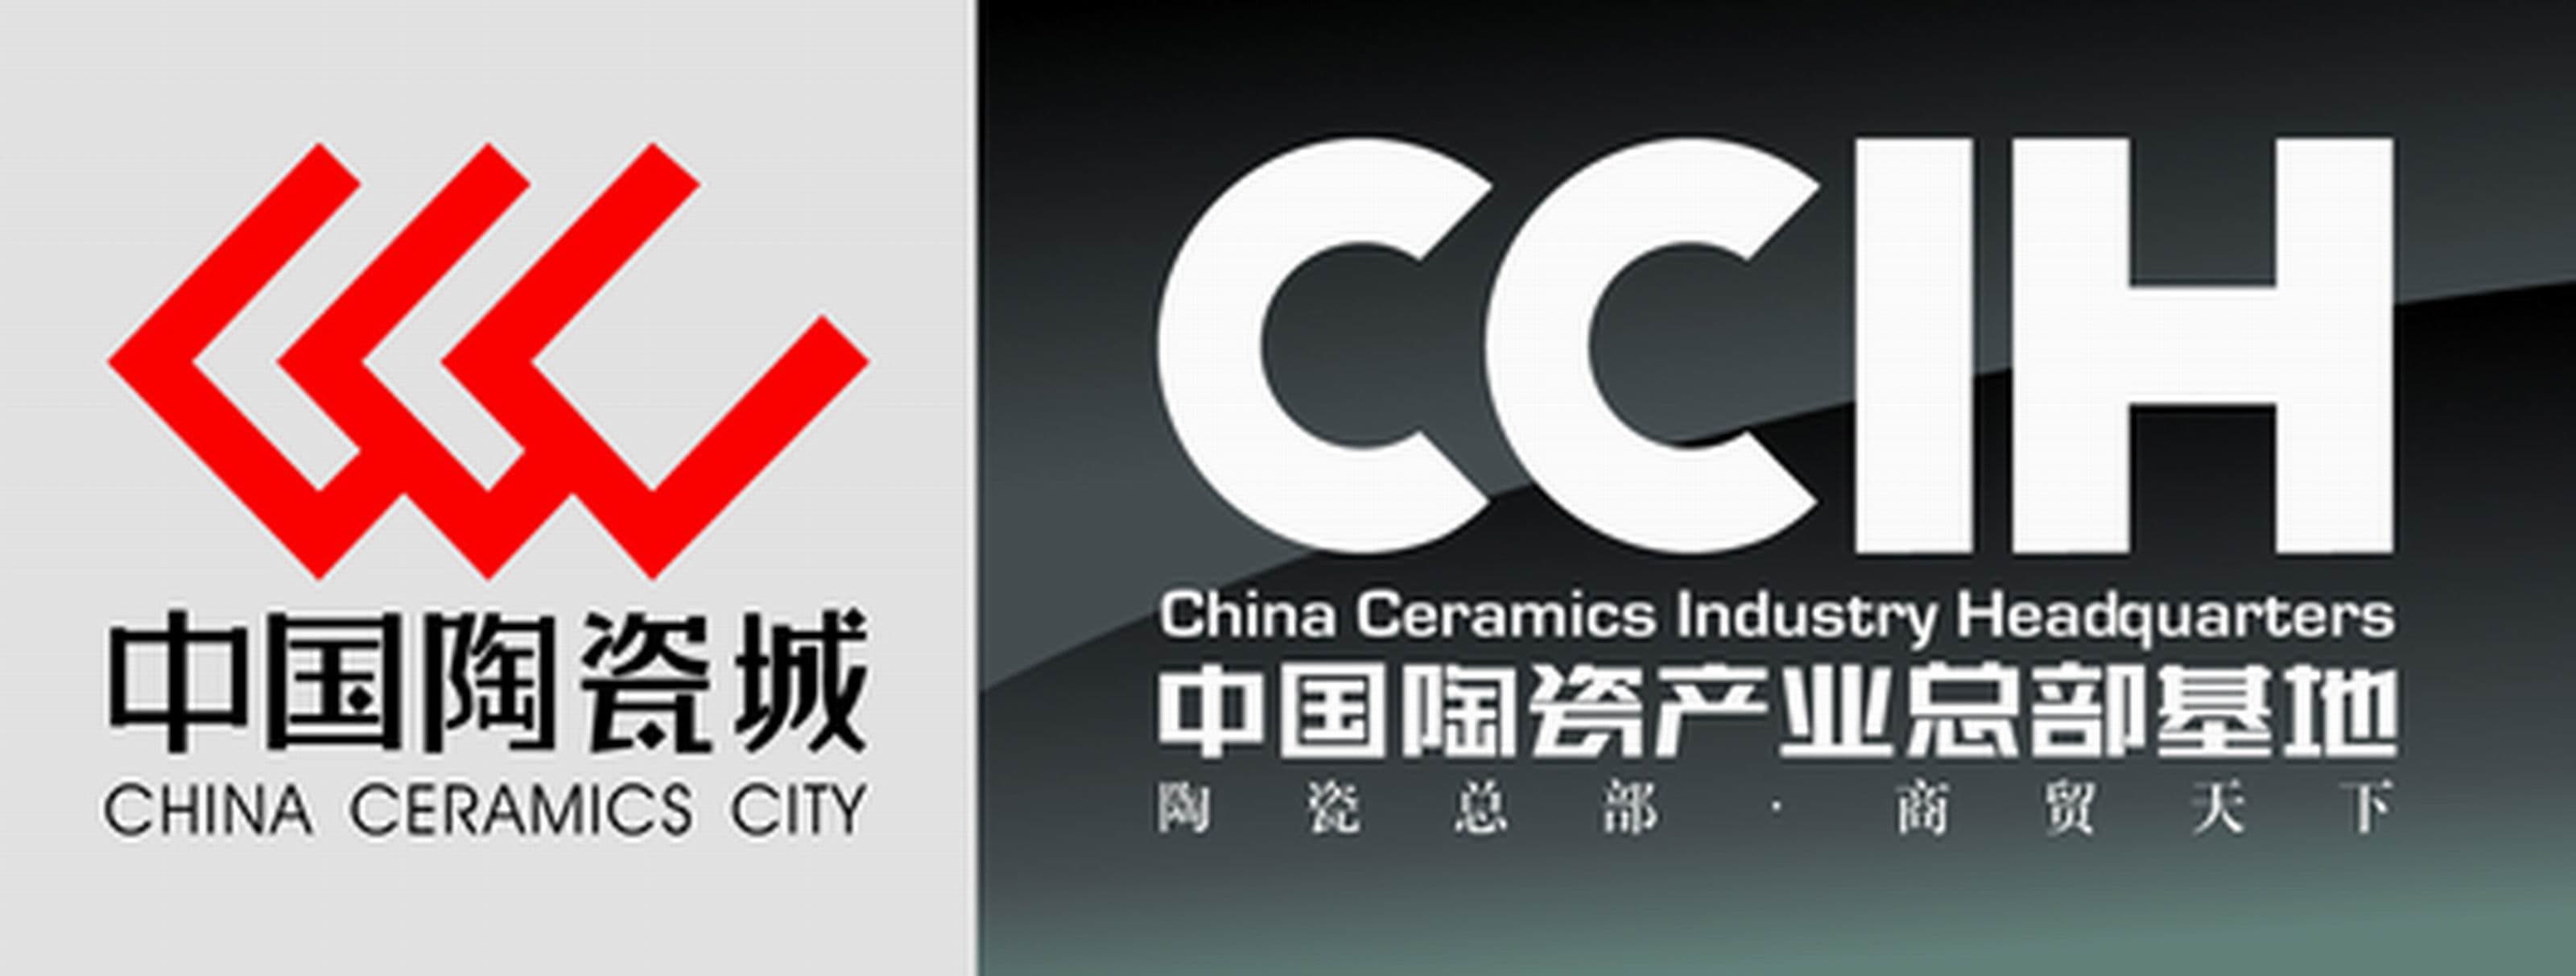 China Ceramics Industry Headquarters